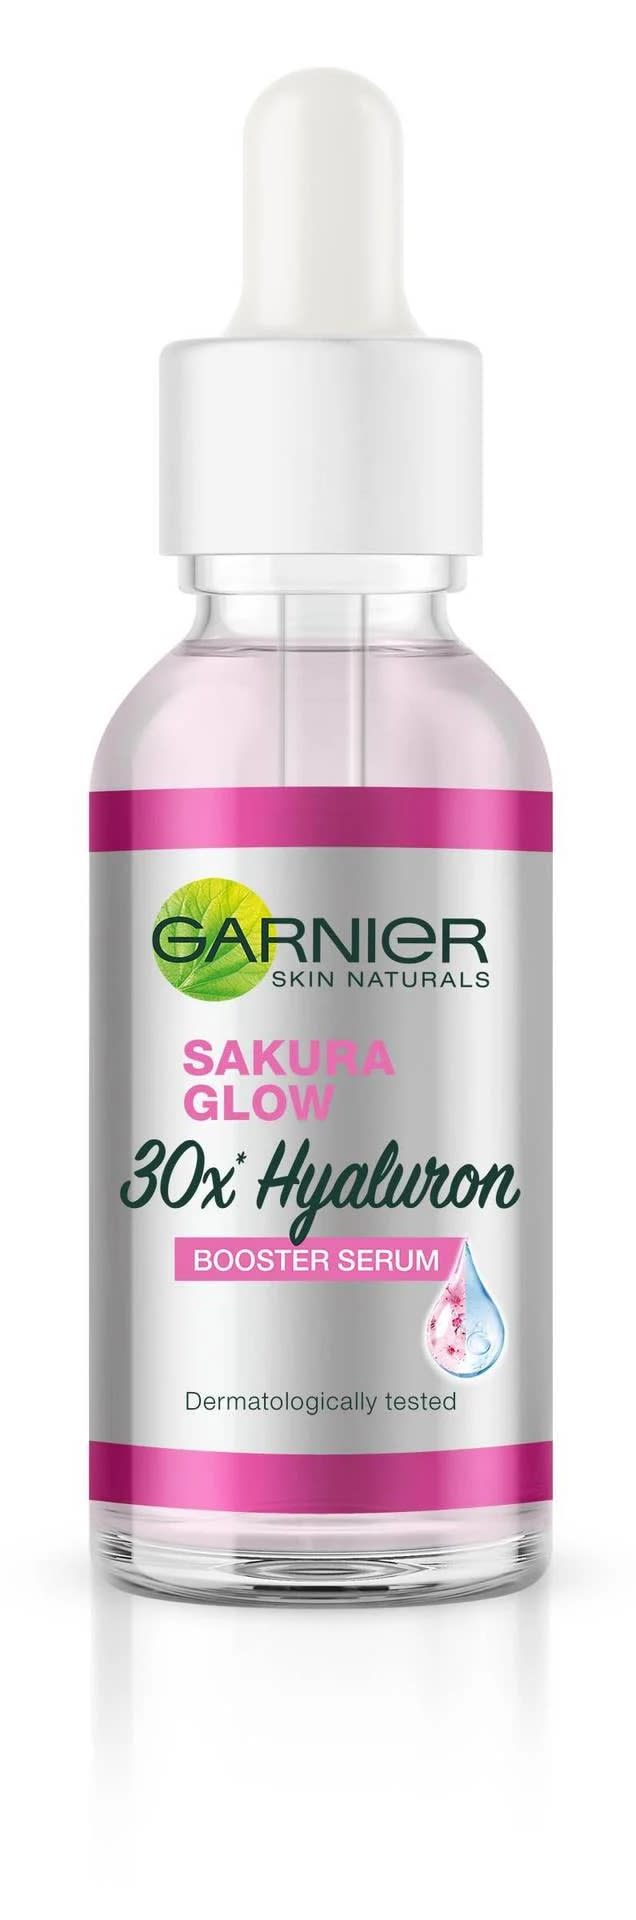 Garnier Sakura Glow 30x Hyaluron Booster Serum